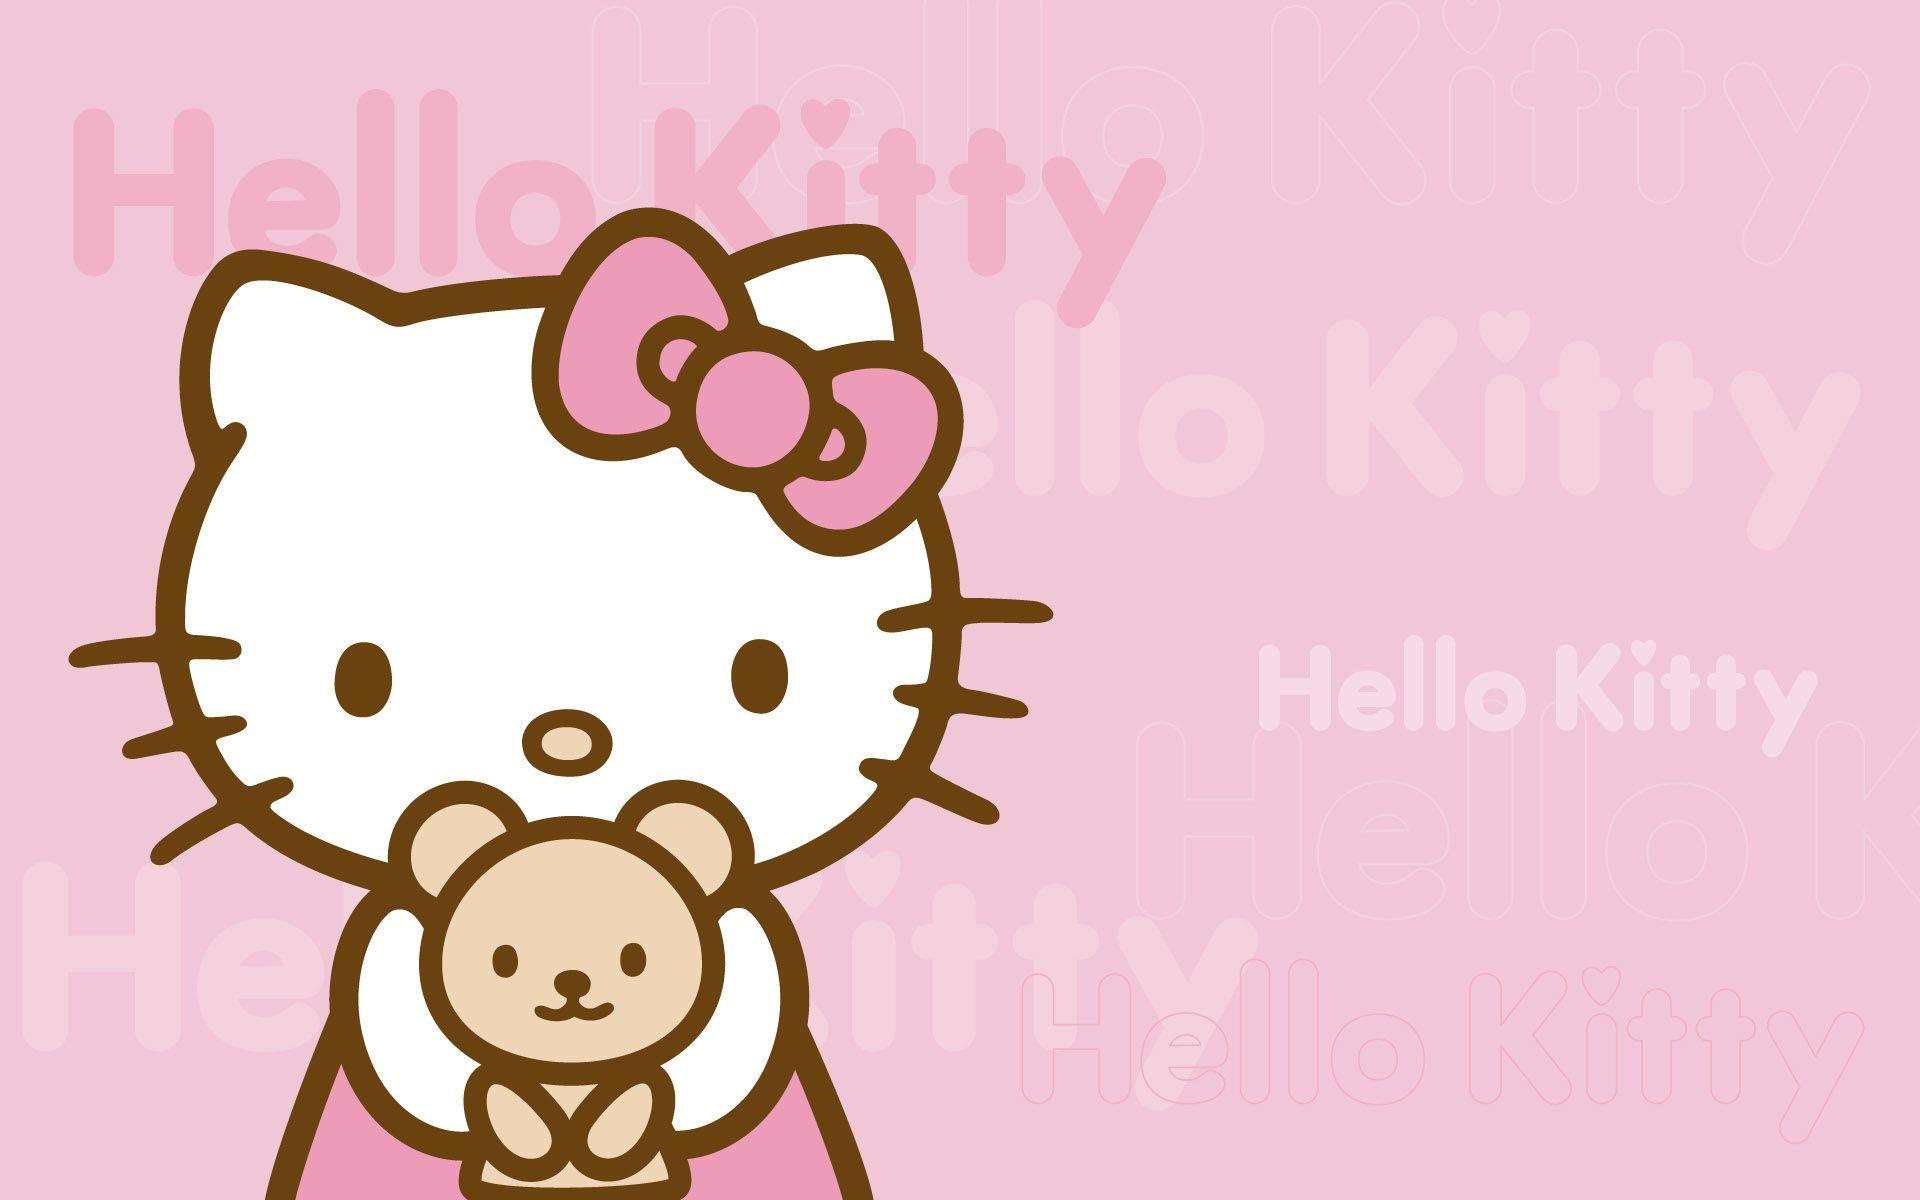 Hello Kitty Face Wallpaper Image Wallpaper. Wallpaper